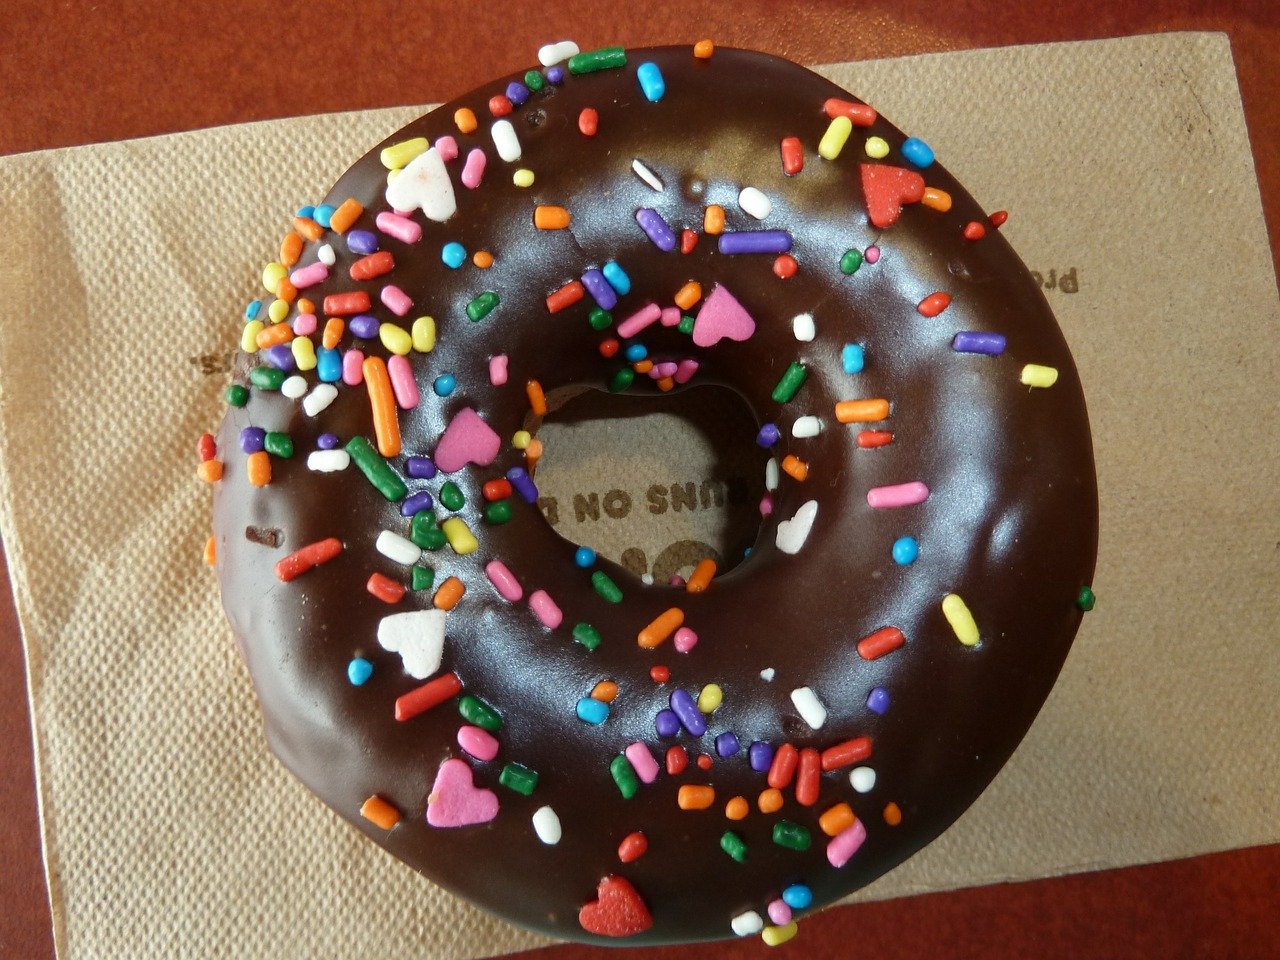 Mmm, donuts!